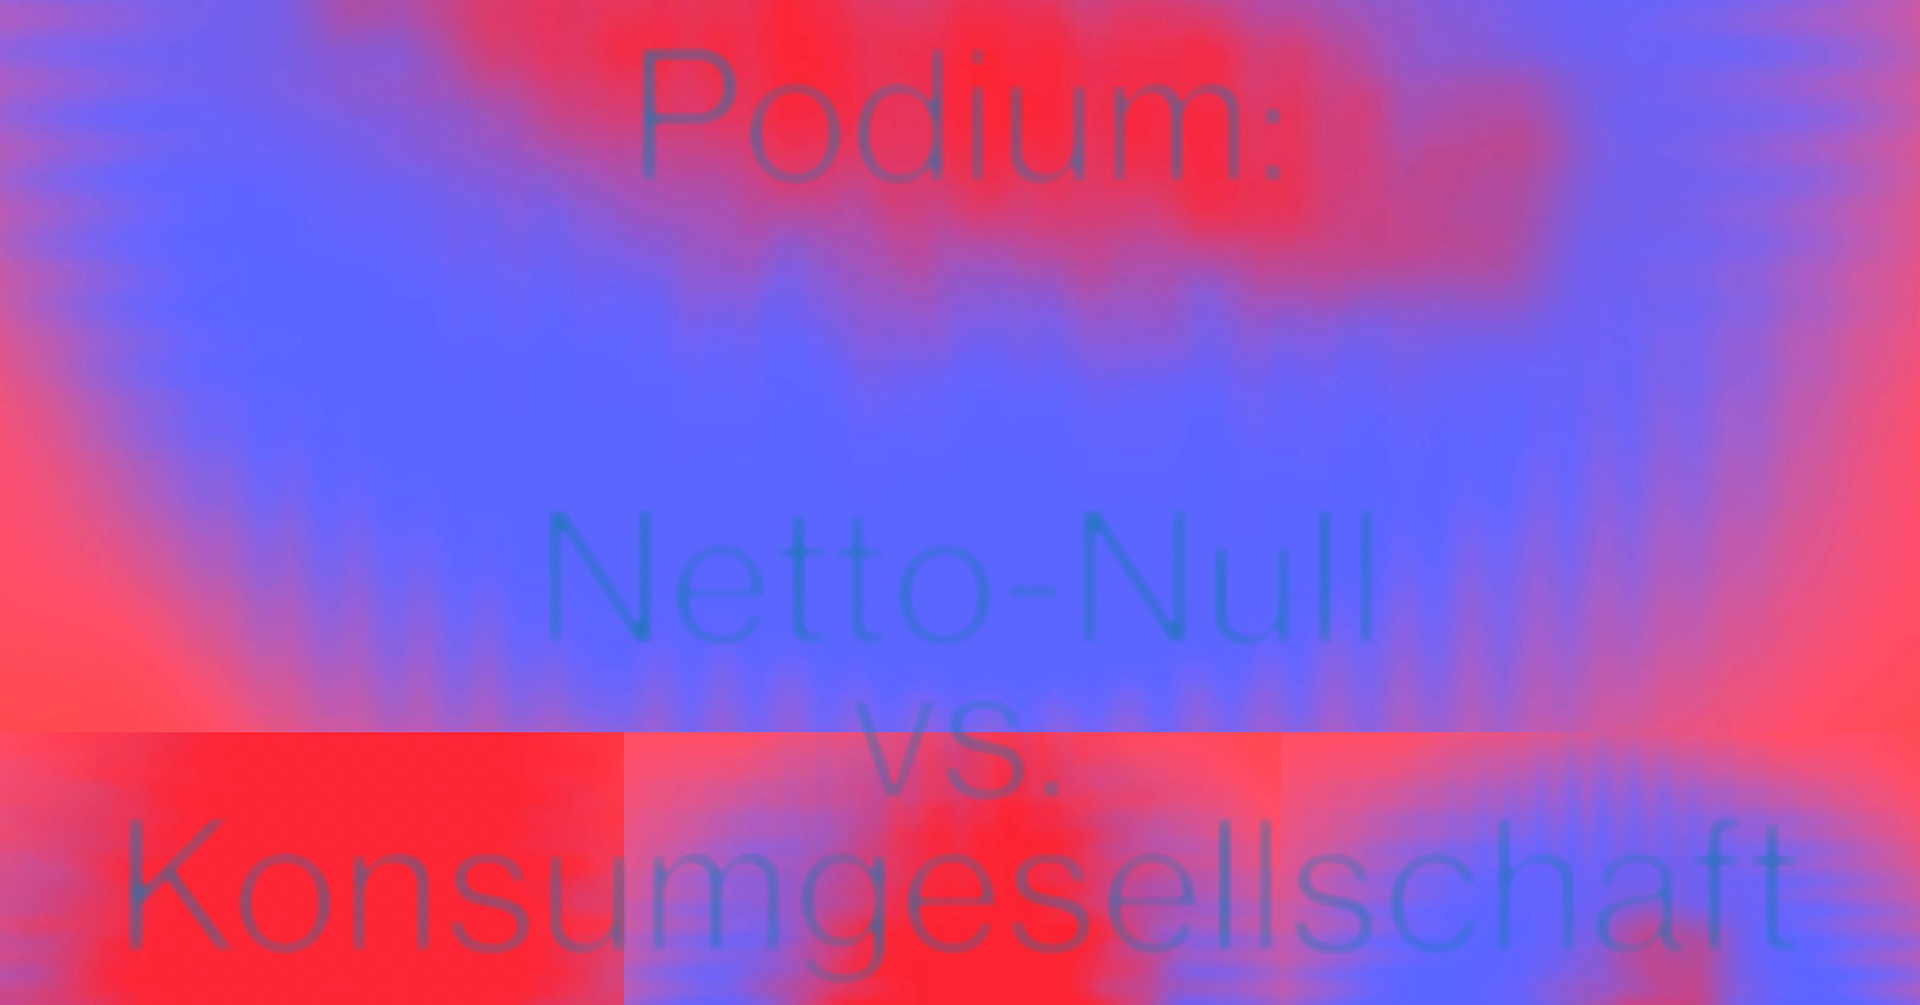 «Podium: Netto-Null vs. Konsumgesellschaft»